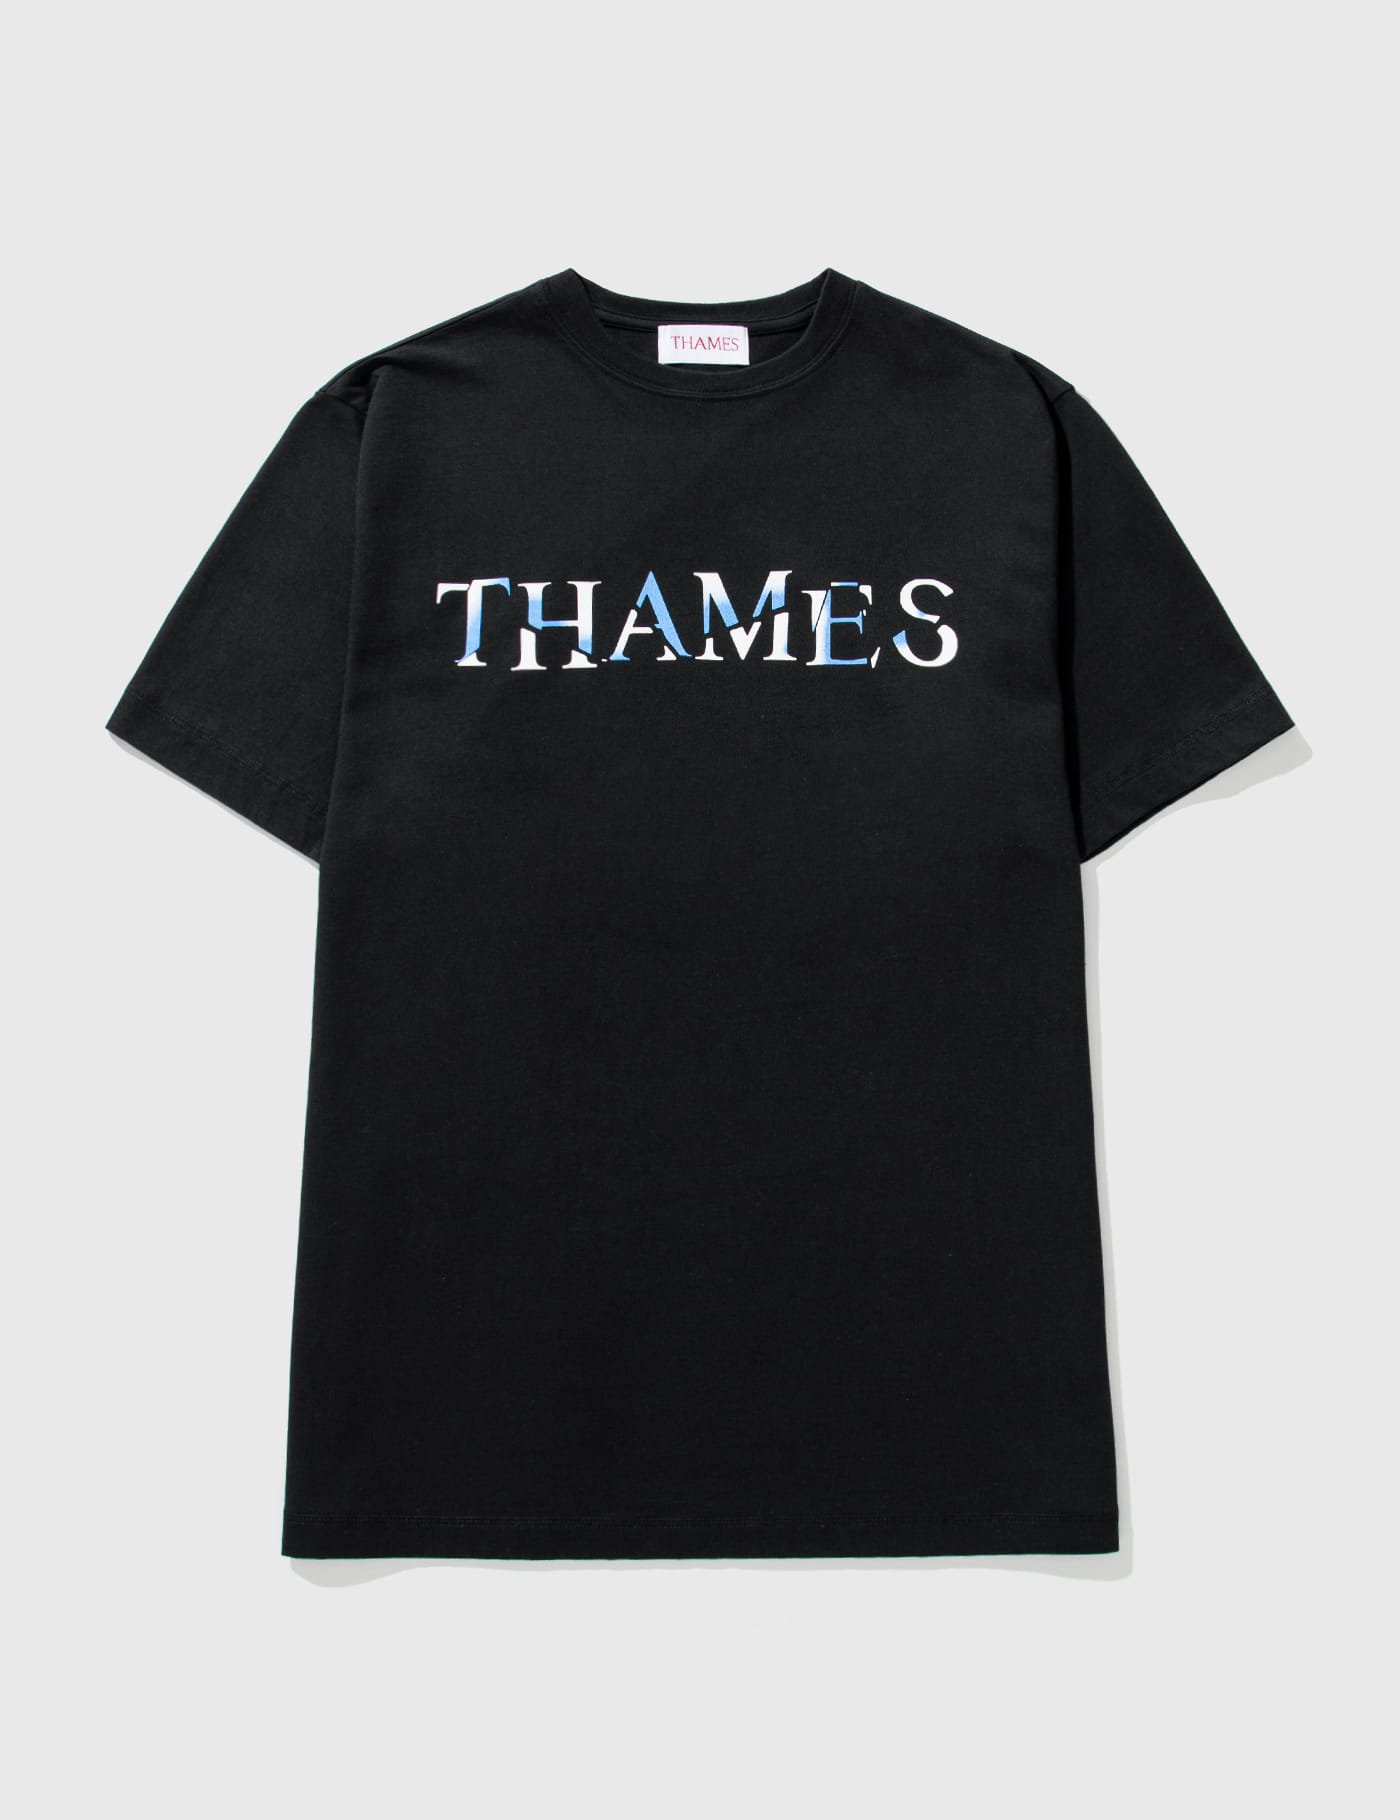 Thames MMXX Thames Phantom T-shirt